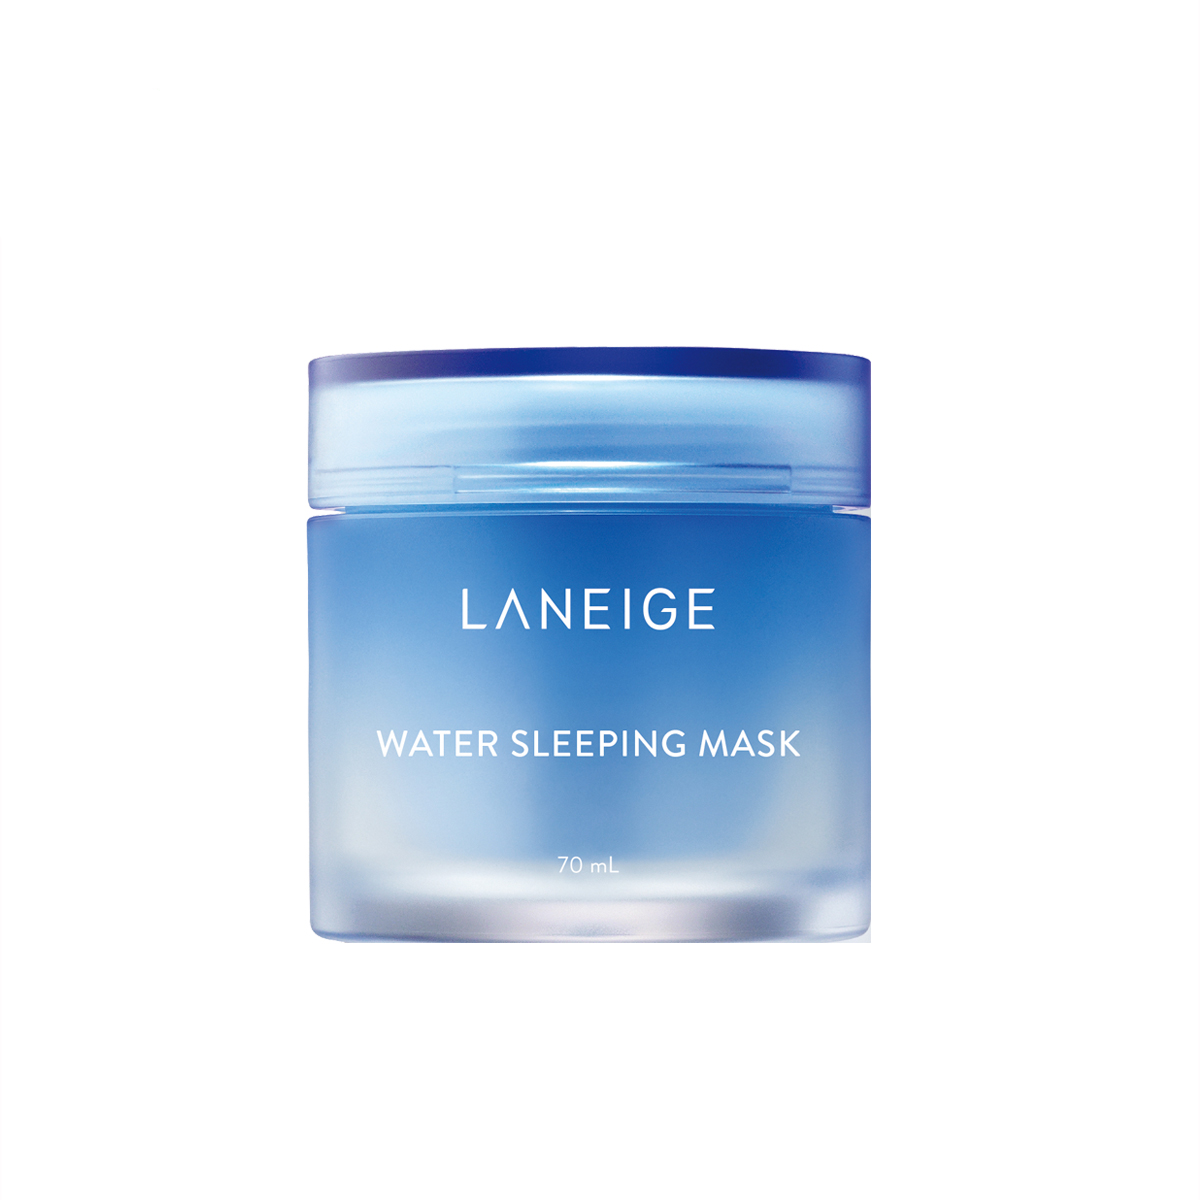 LANEIGE Water Sleeping Mask asian korean skincare montreal toronto canada thekshop thekshop.ca natural organic vegan cruelty-free cosmetics